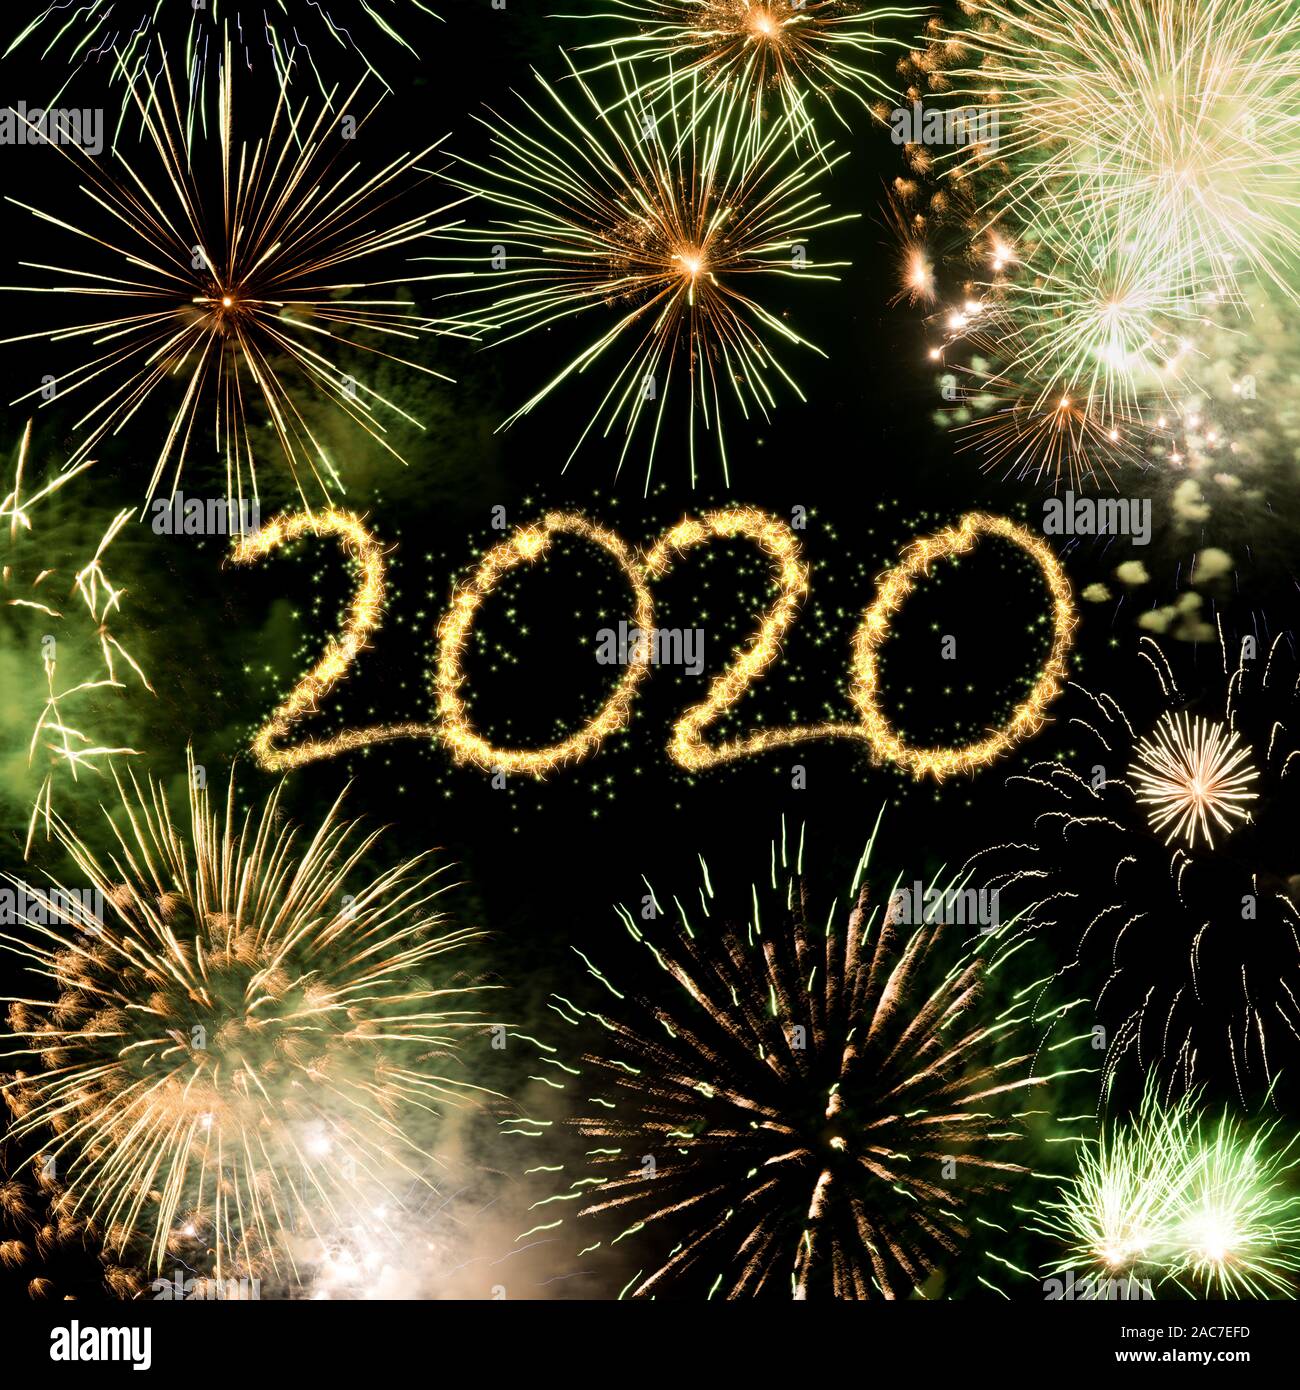 2020 New Year fireworks background Stock Photo - Alamy